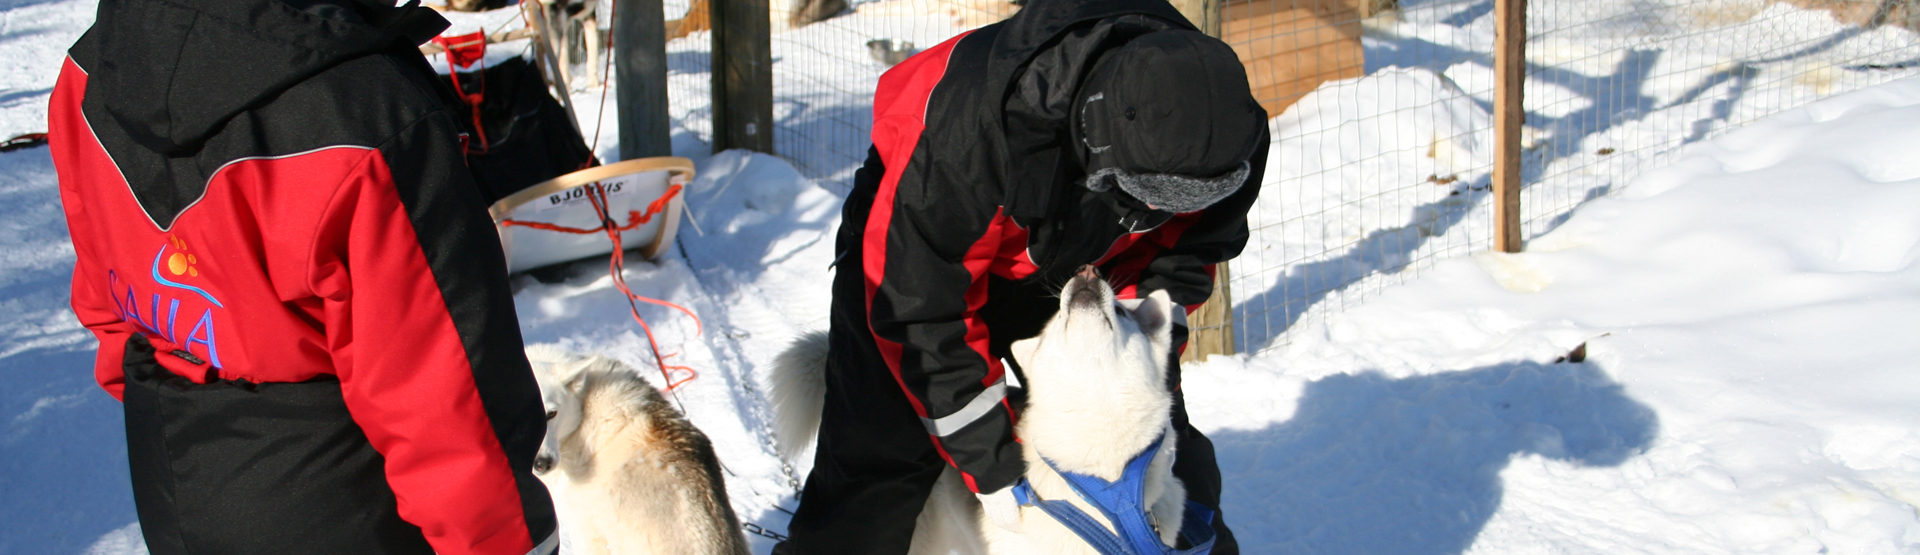 Huskytouren in Finnland: Einmalige Hundeschlittentouren erleben